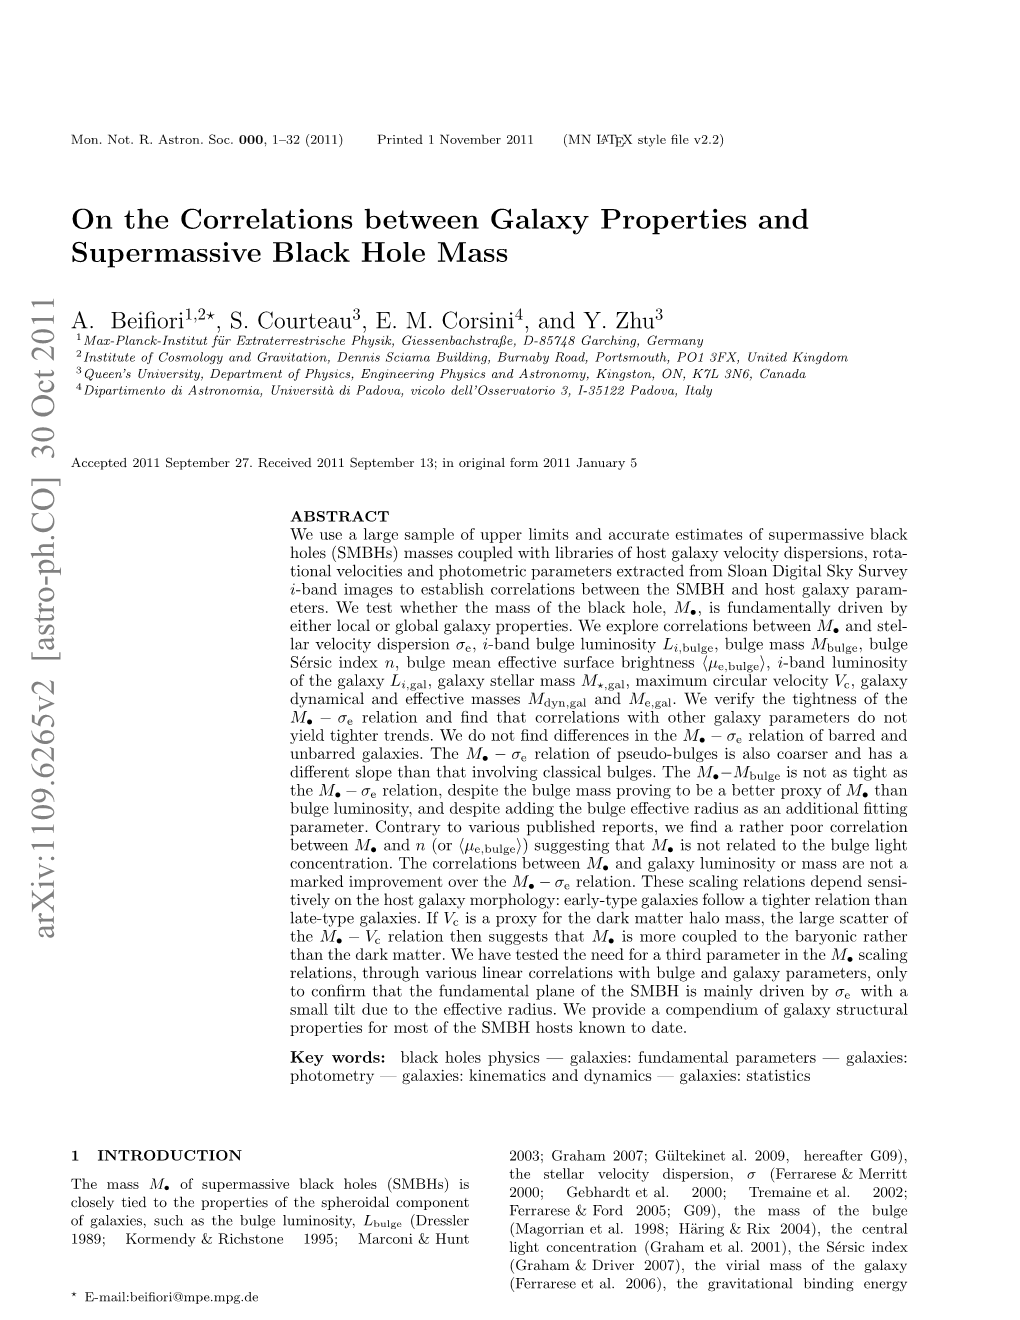 On the Correlations Between Galaxy Properties and Supermassive Black